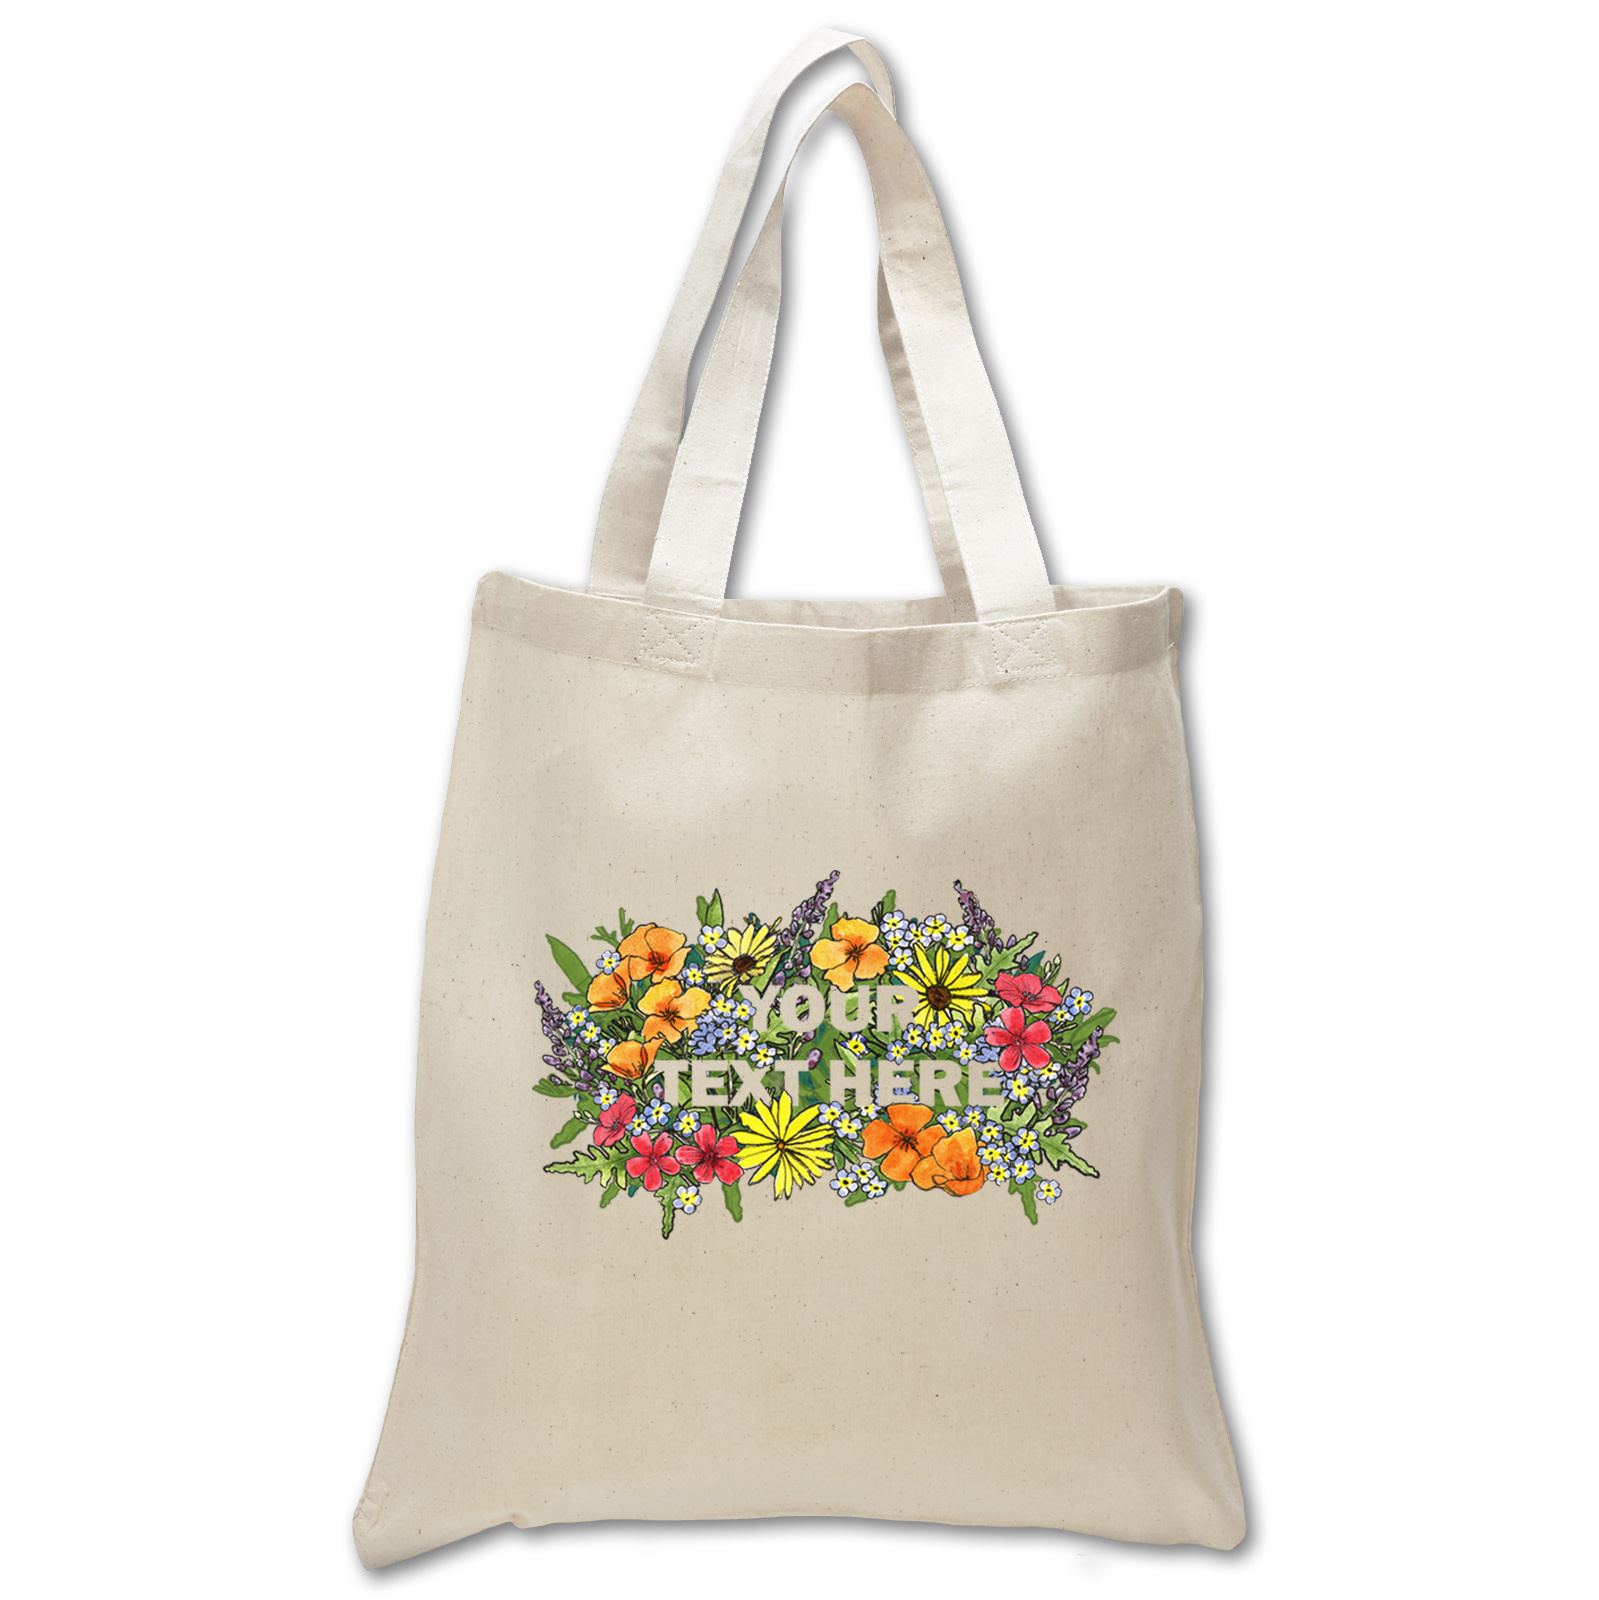 Customizable 6 oz Cotton Fabric Bag